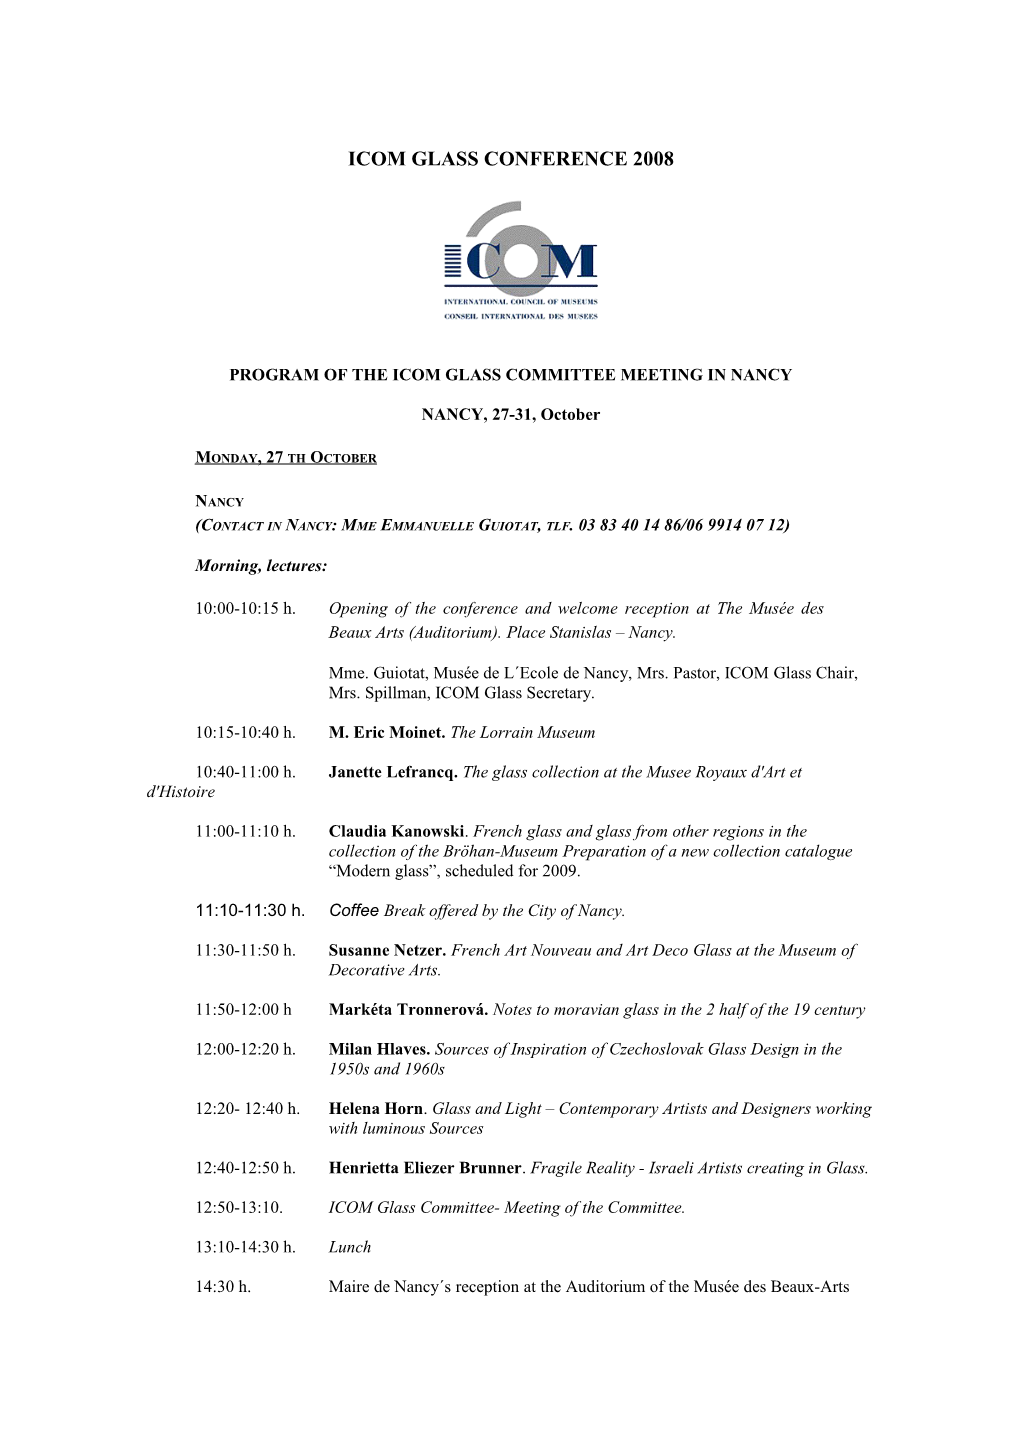 Program of the Icom Glass Committee Meeting in Nancy